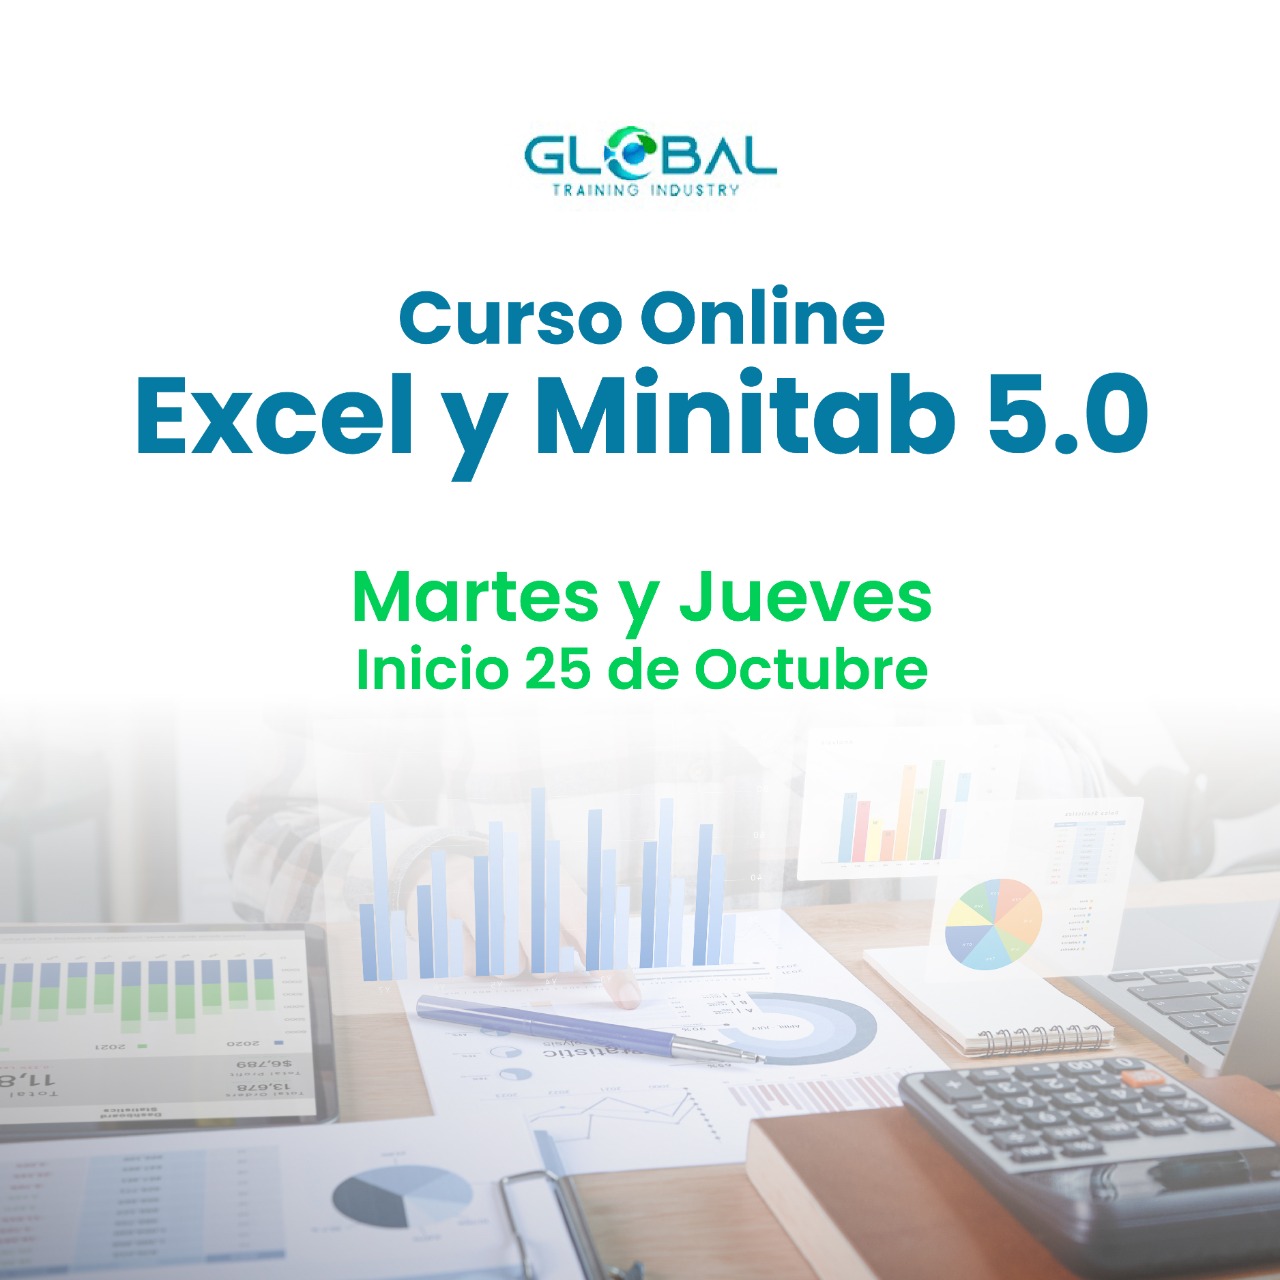 Excel y Minitab  5.0